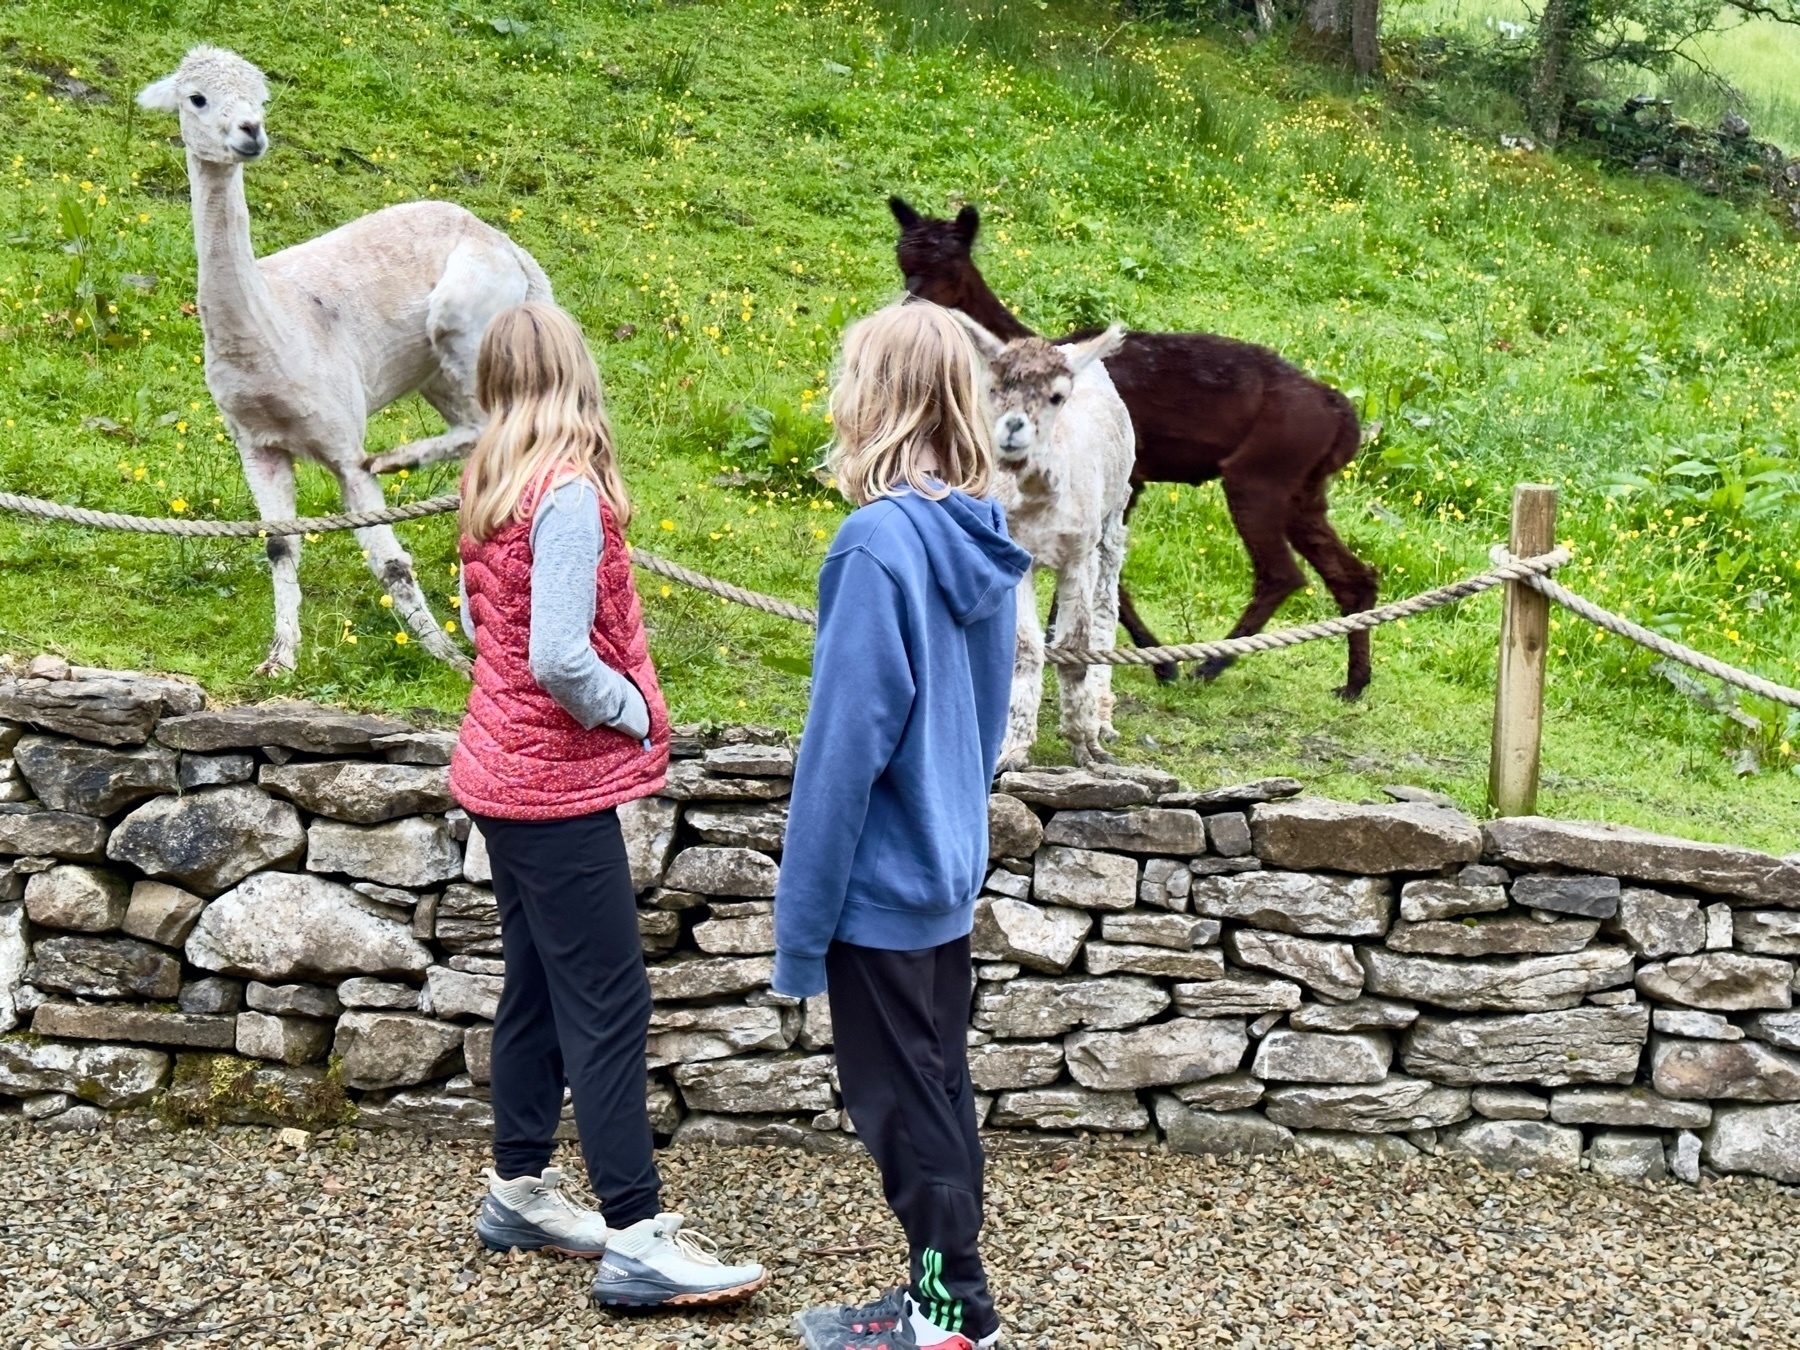 Auto-generated description: Two children are observing three alpacas in a grassy enclosure.